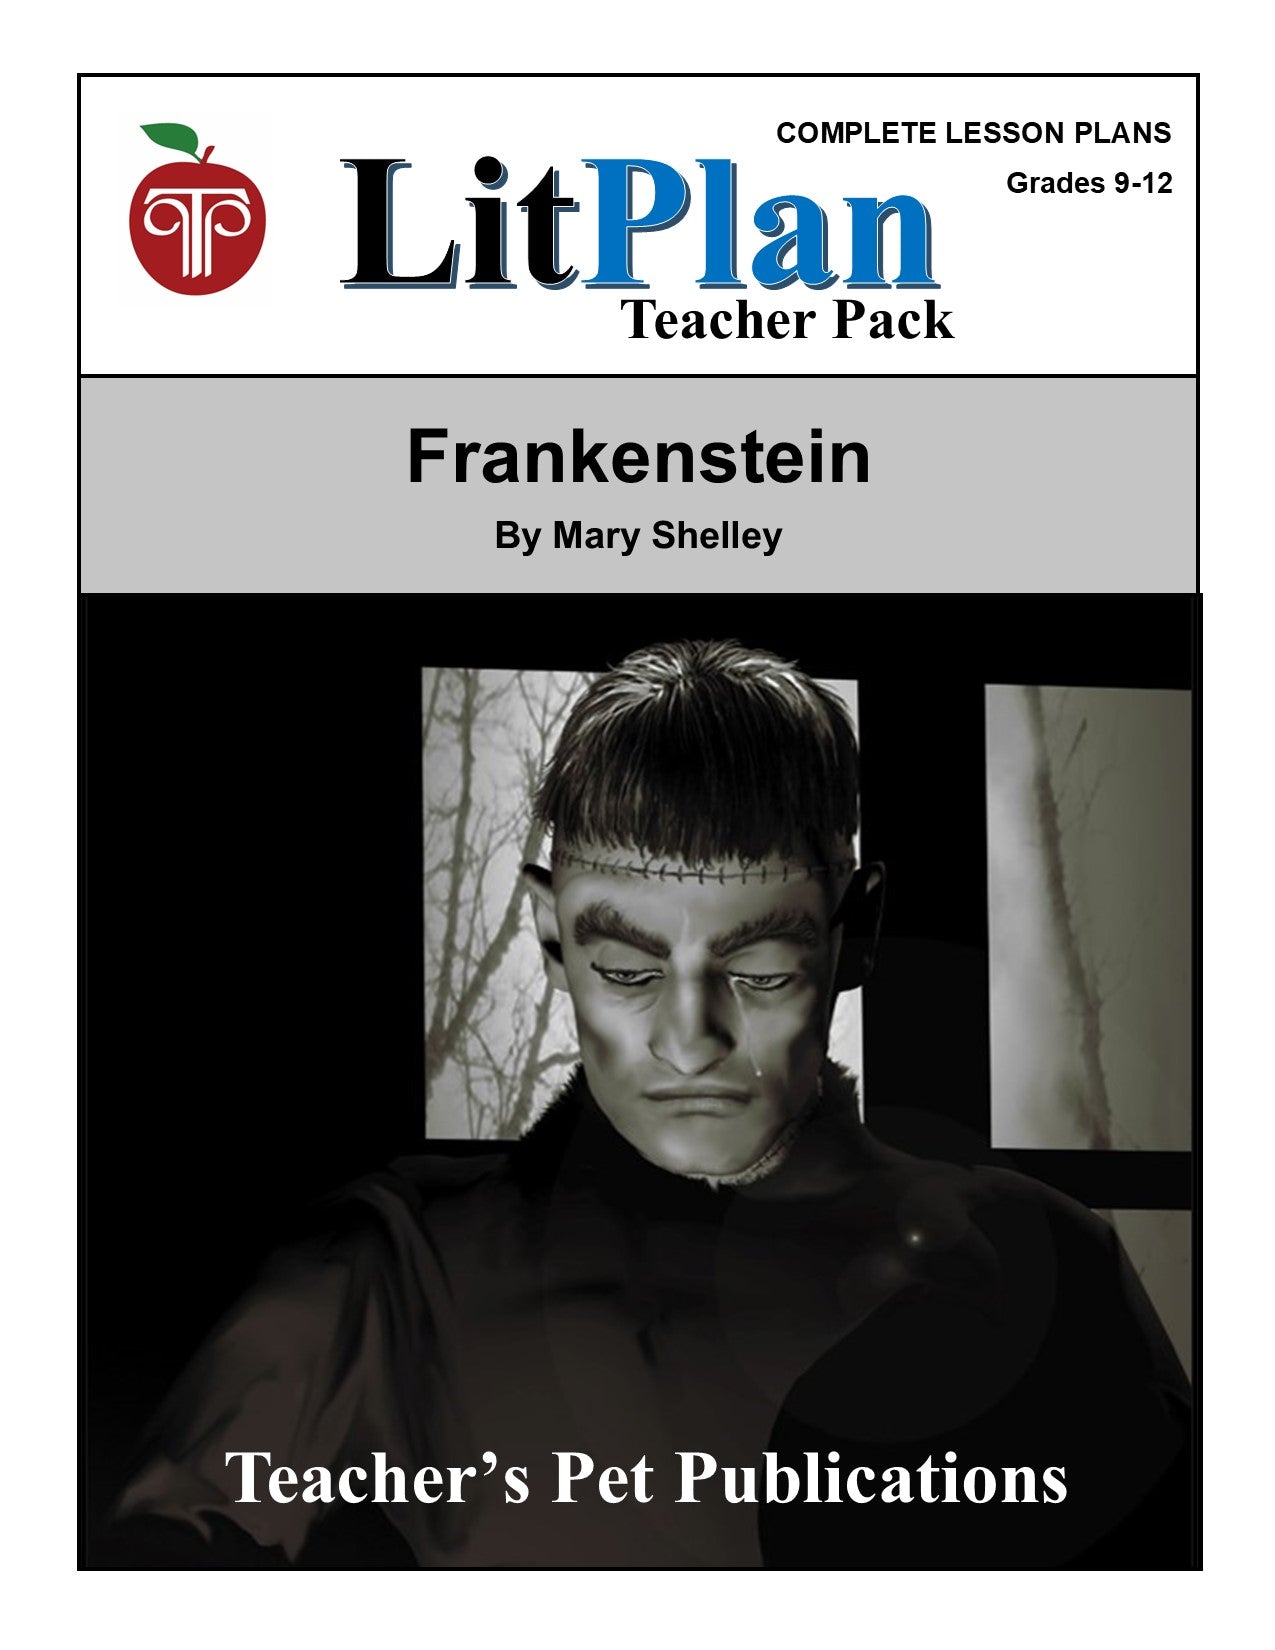 Frankenstein: LitPlan Teacher Pack Grades 9-12